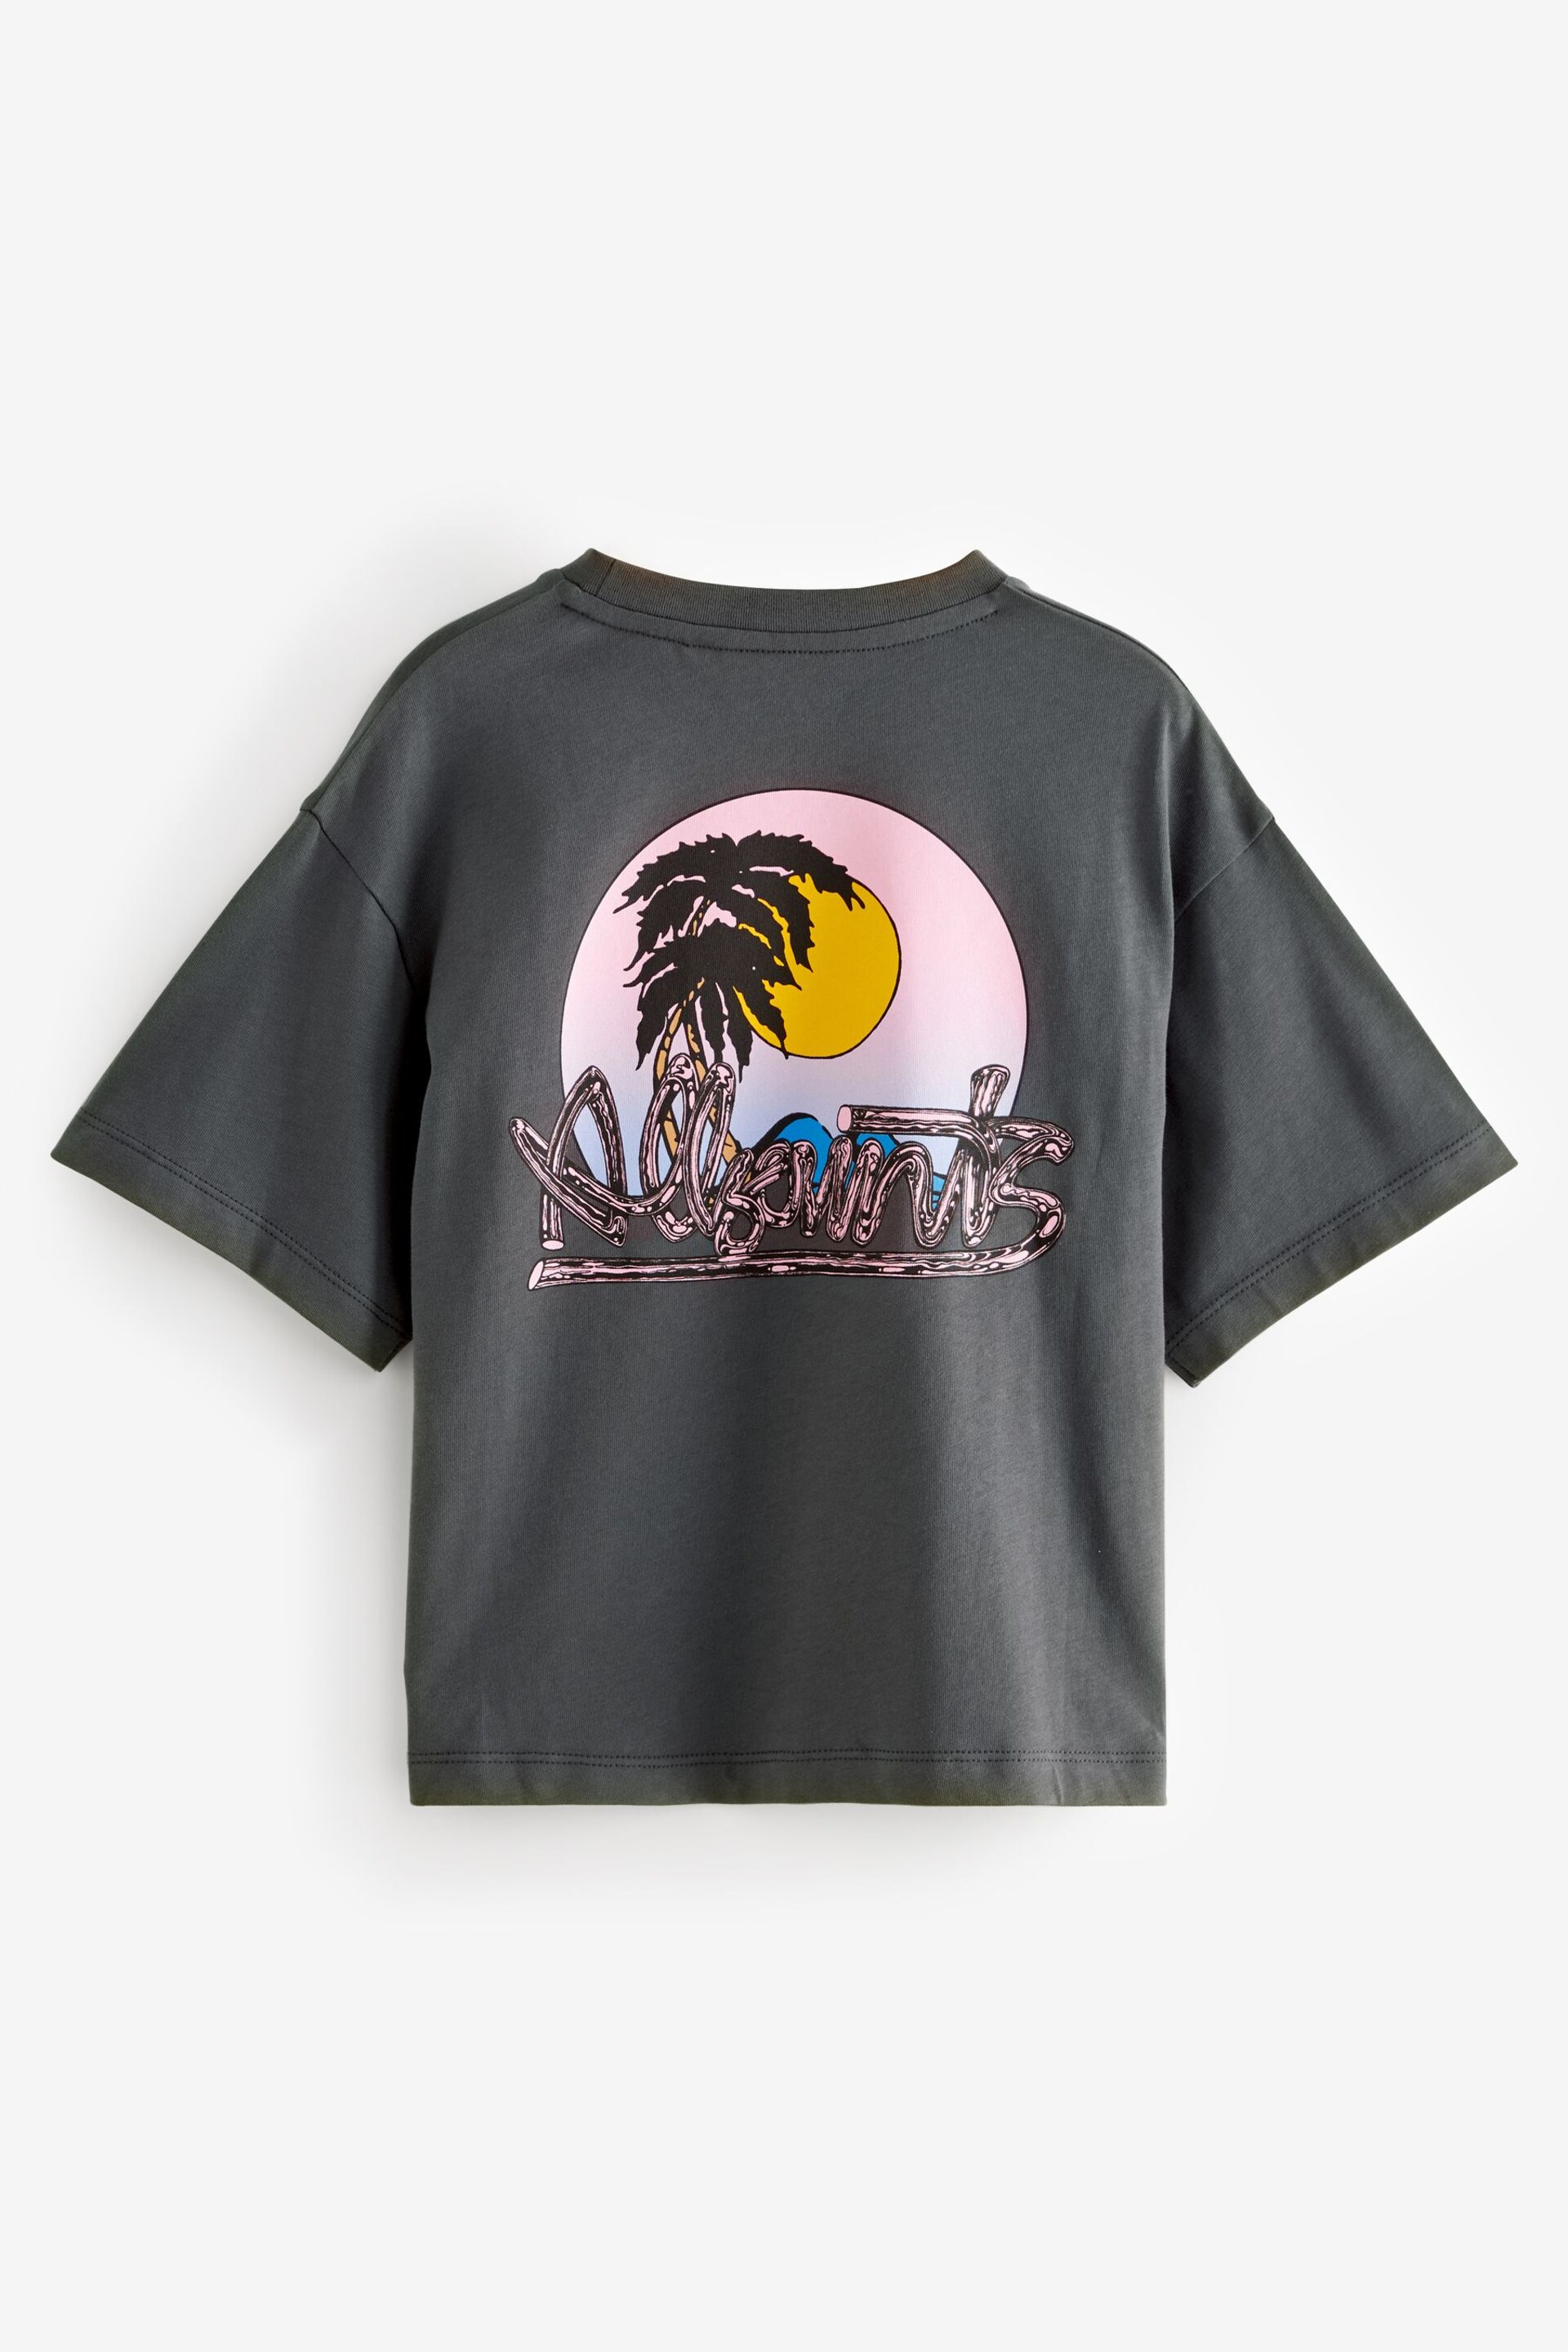 smALLSAINTS Charcoal Grey/Chroma Boys Graphic Oversized Crew T-Shirt - Image 5 of 5